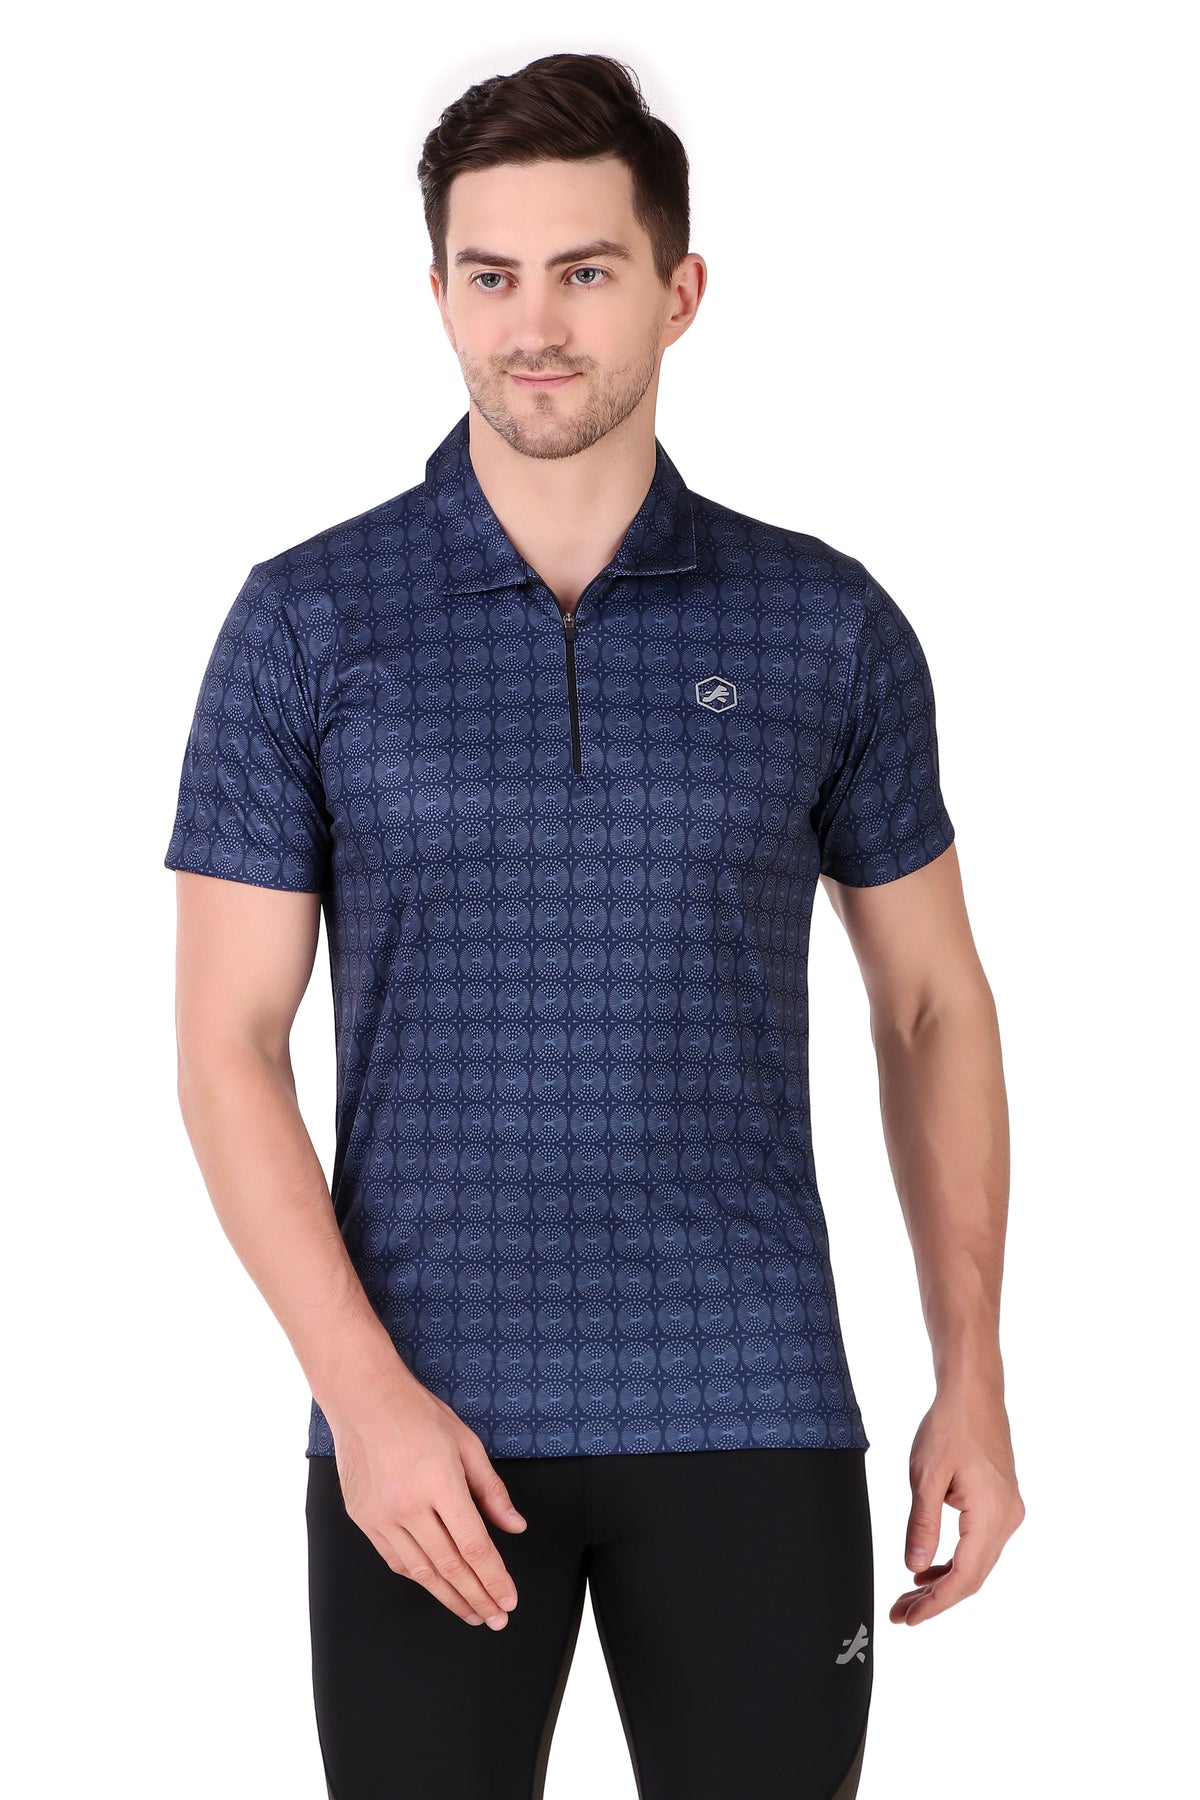 Performance Polo Zip Collar Tshirt For Men (Navy Pattern)